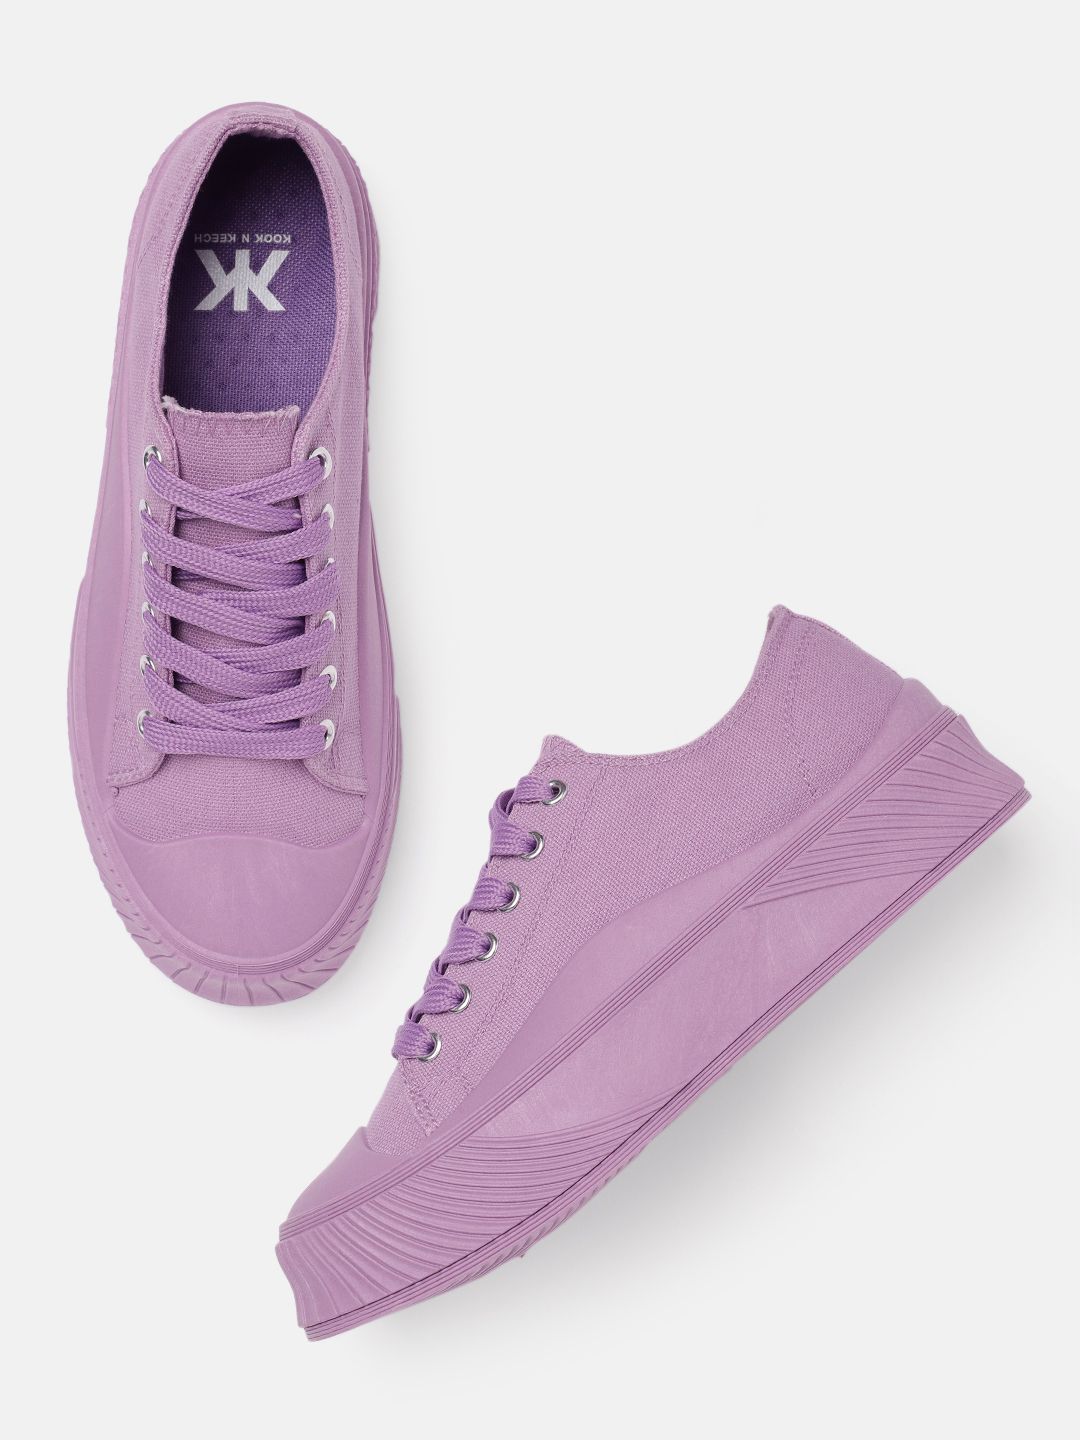 Kook N Keech Women Purple Sneakers Price in India